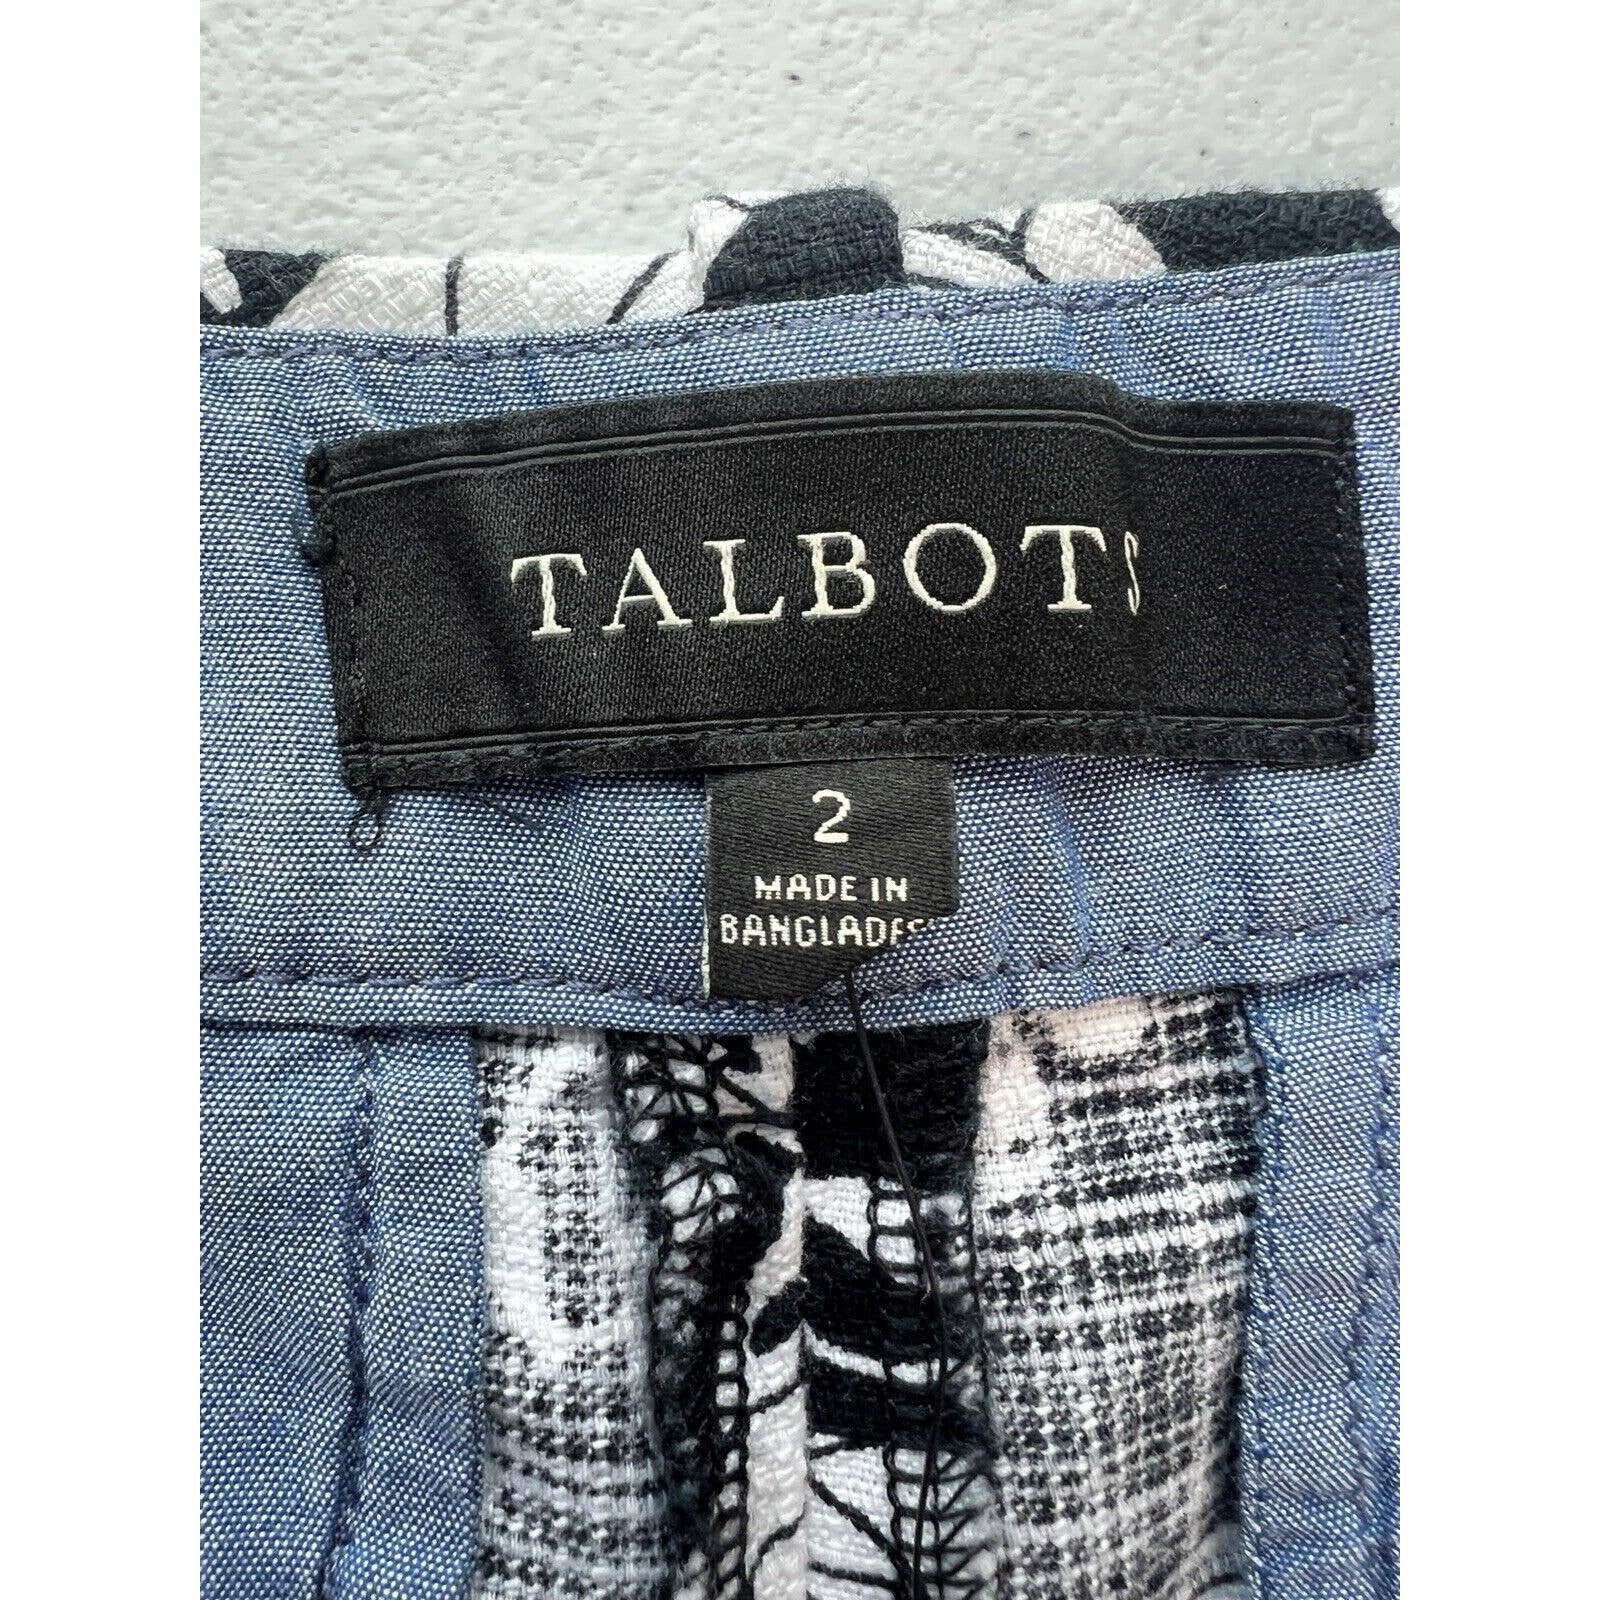 Talbots Cotton Shorts Women’s 2 Black & White Floral 5.5” Inseam Casual